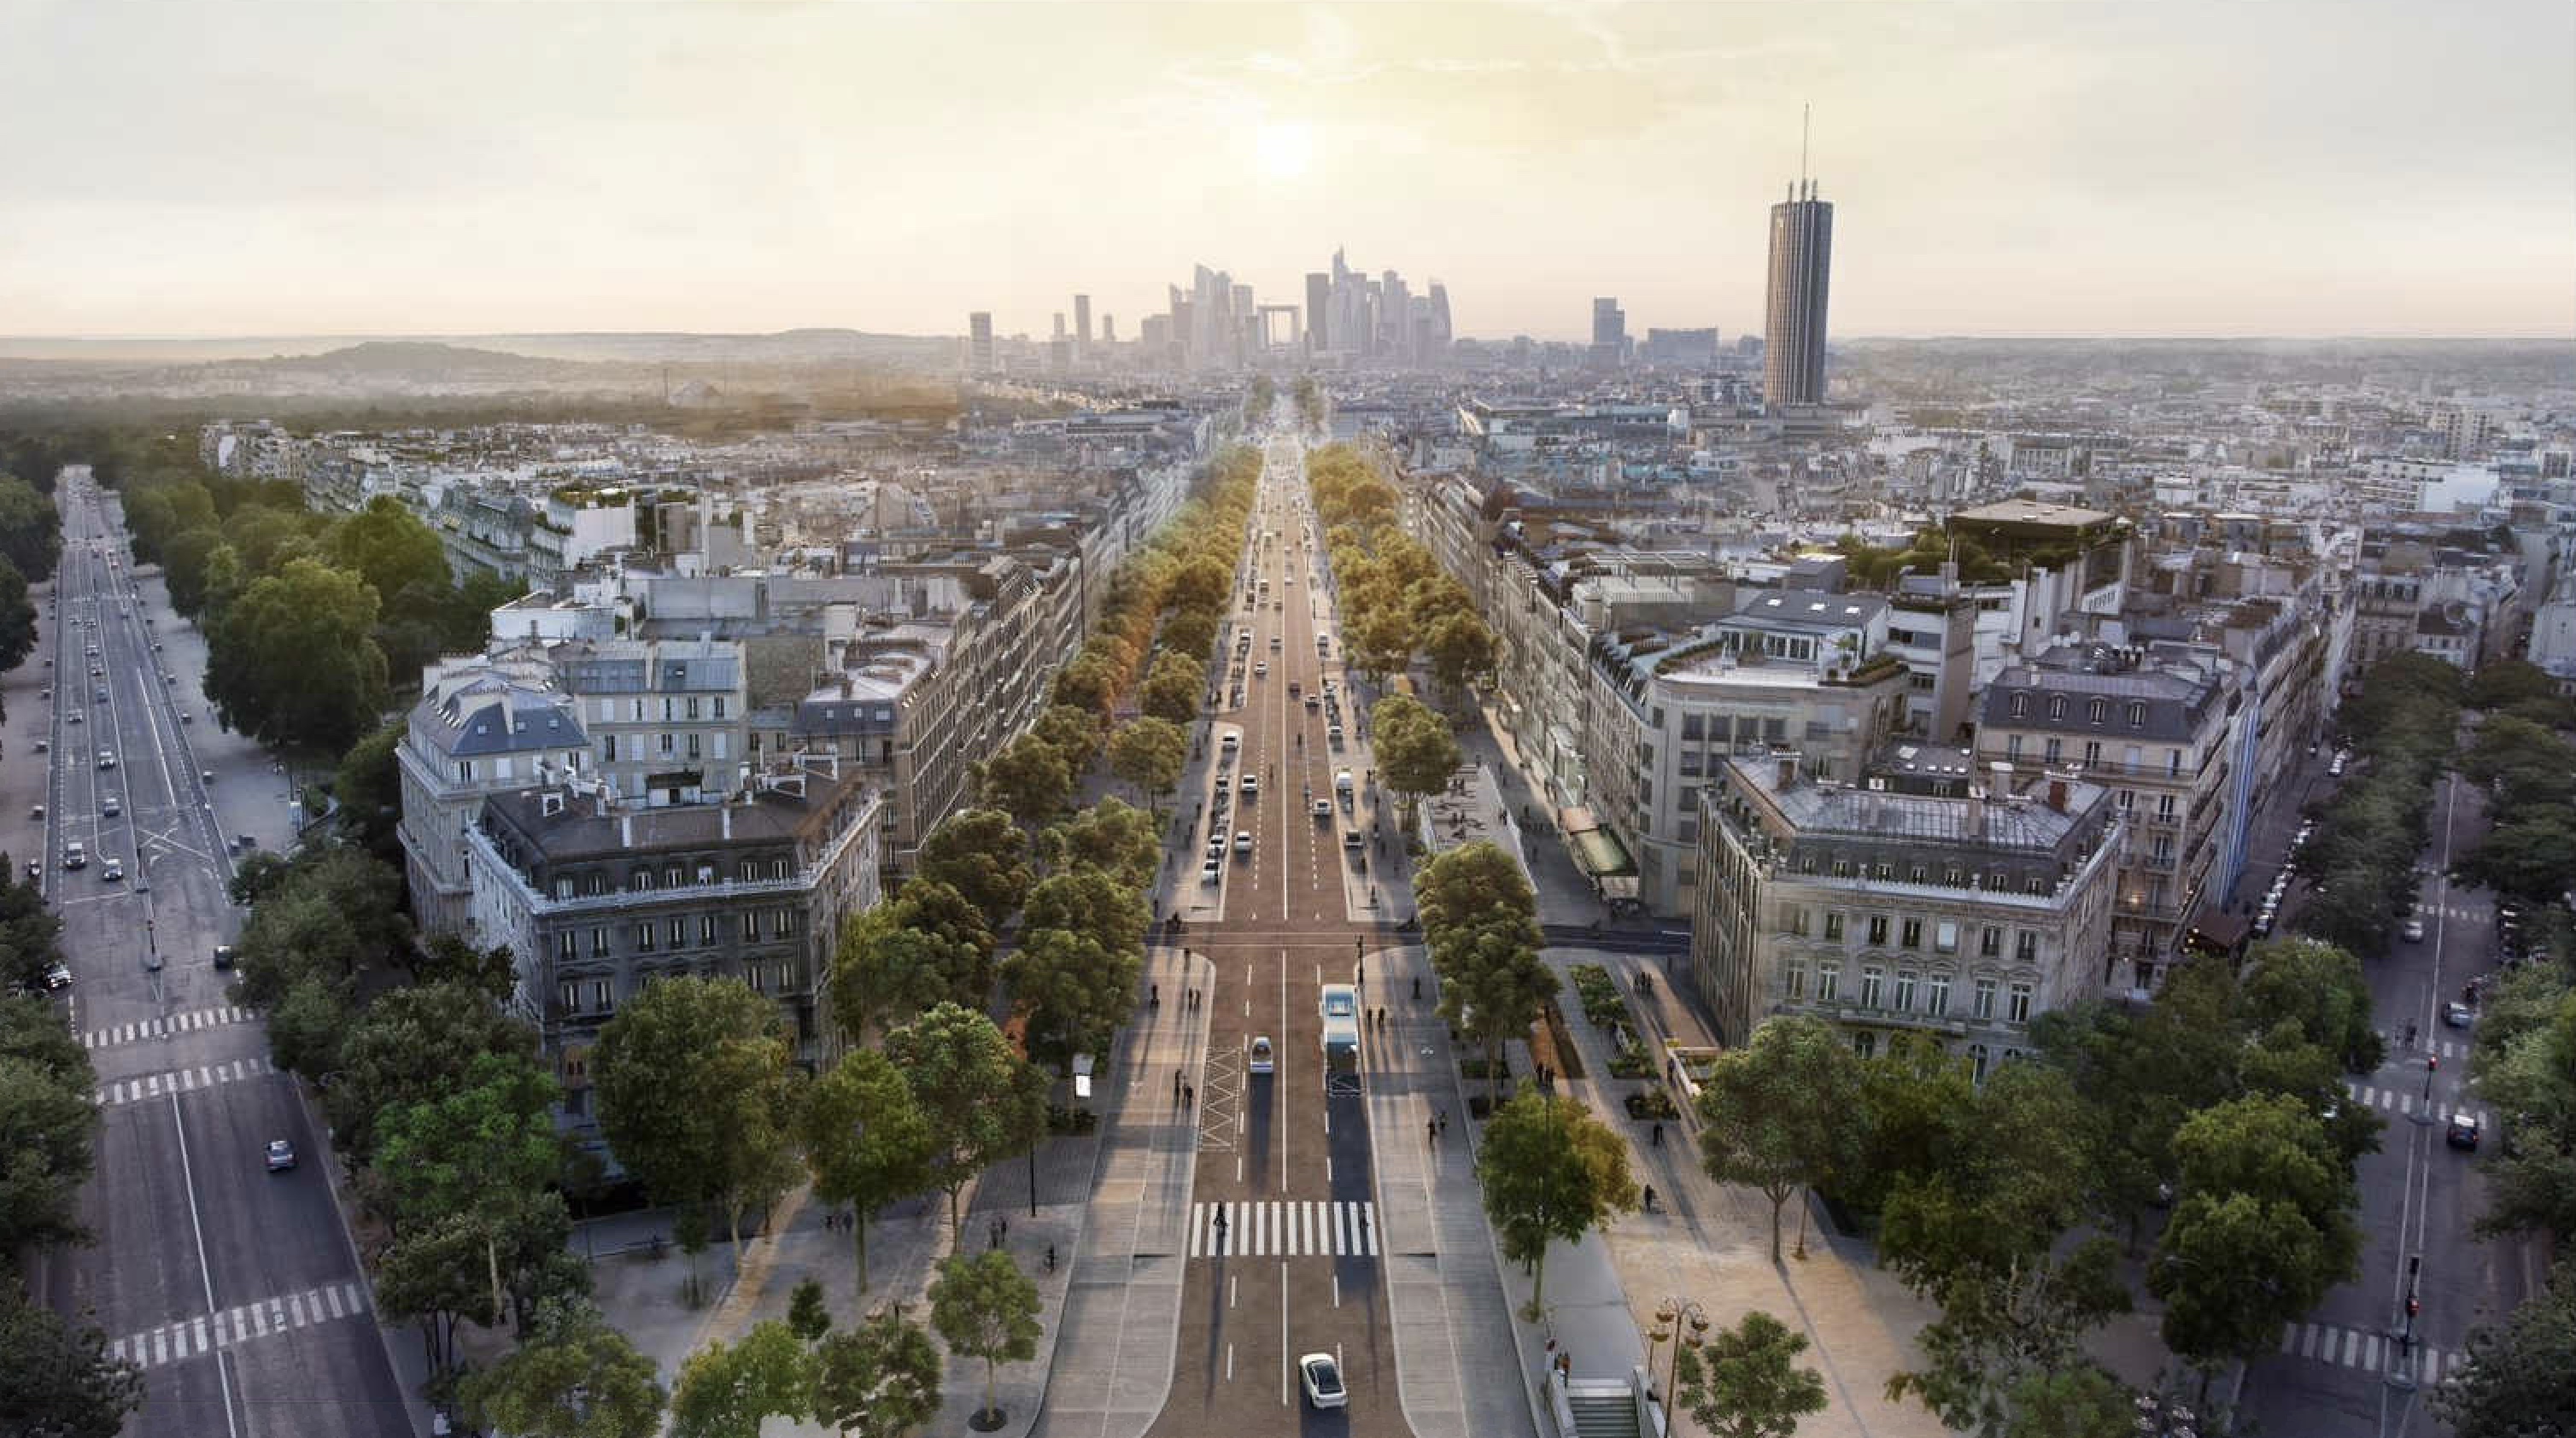 Avenue de la Grande Armée Gets New Design to Remove Car Lanes - Bloomberg